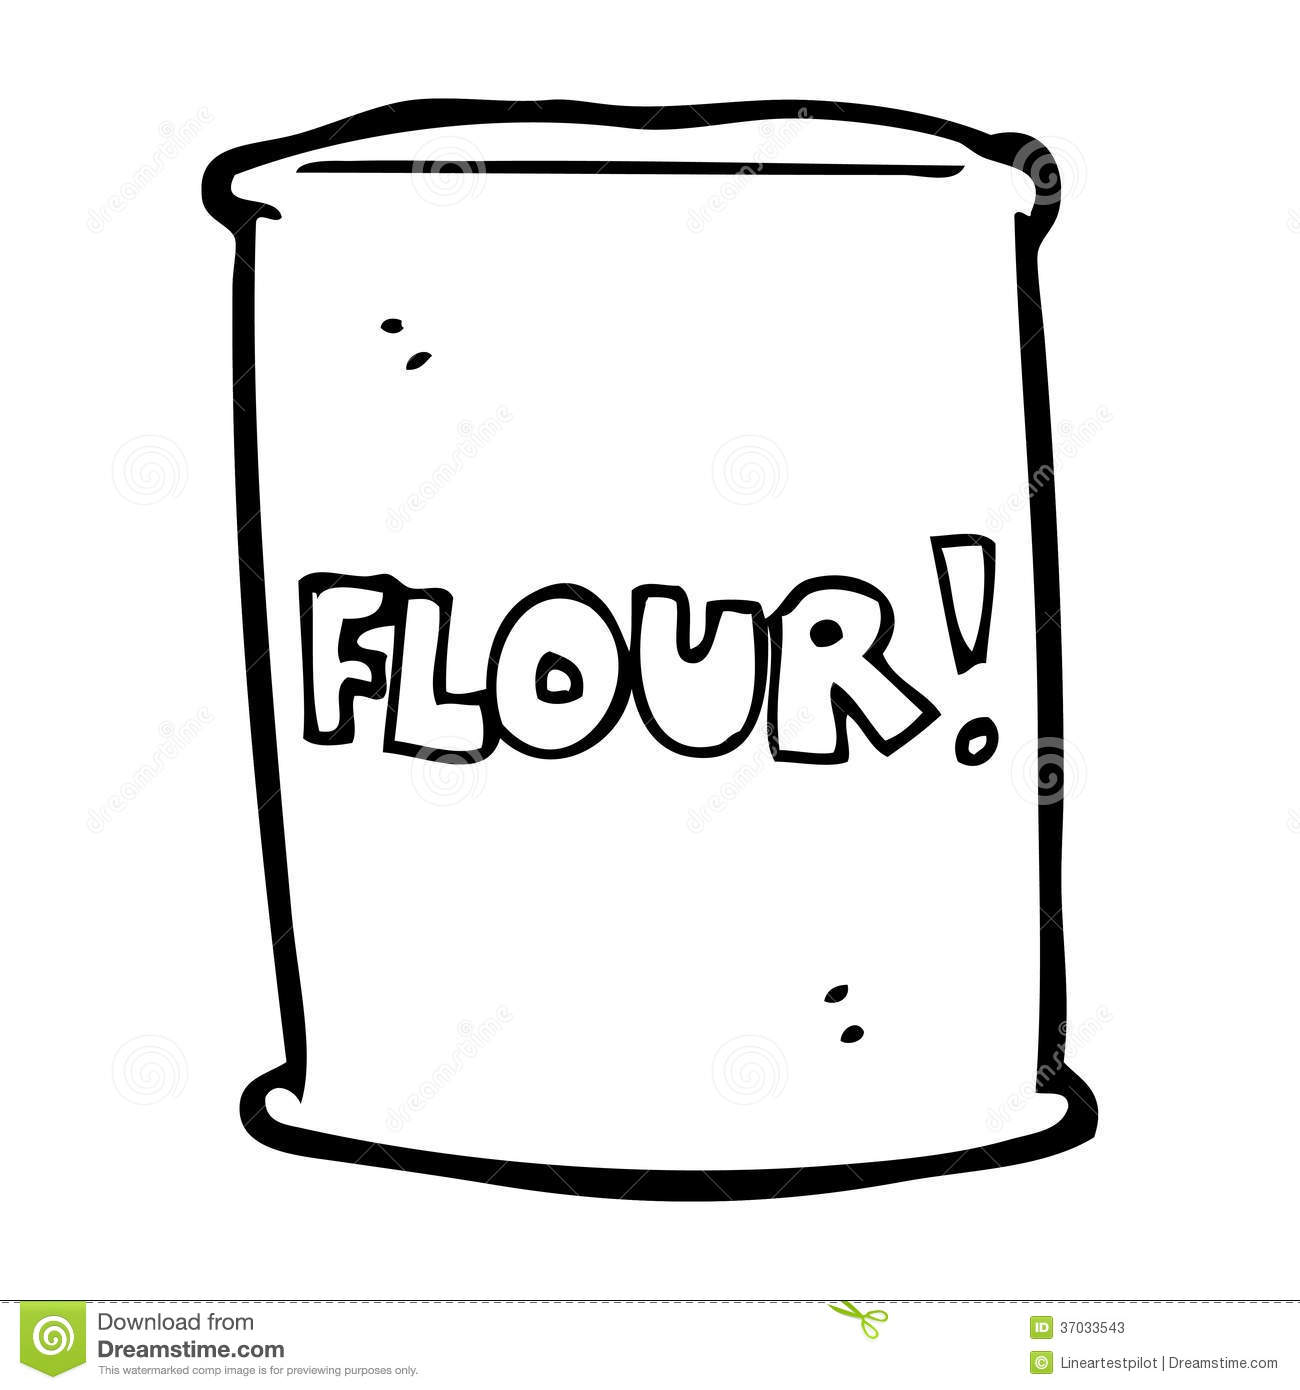 Flour Free Clipart